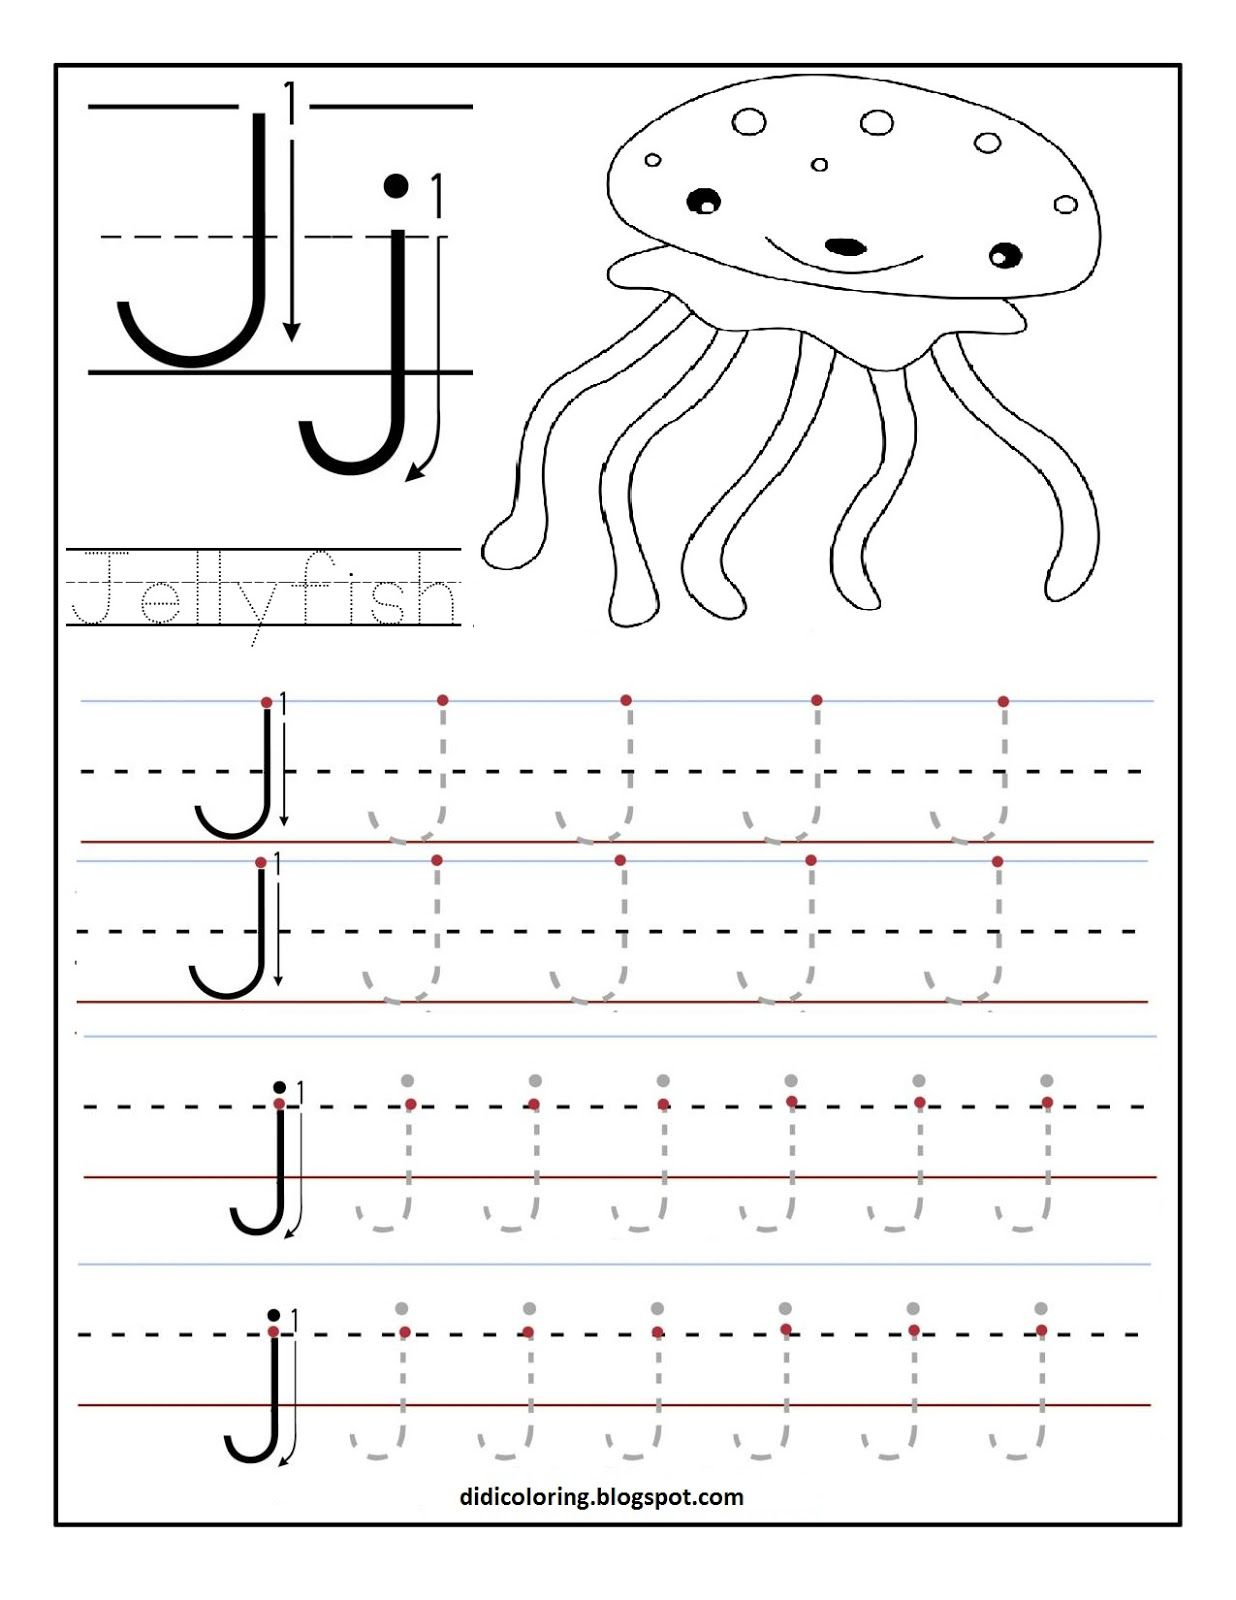 Free Printable Worksheet Letter J For Your Child To Learn intended for Letter J Worksheets Free Printables